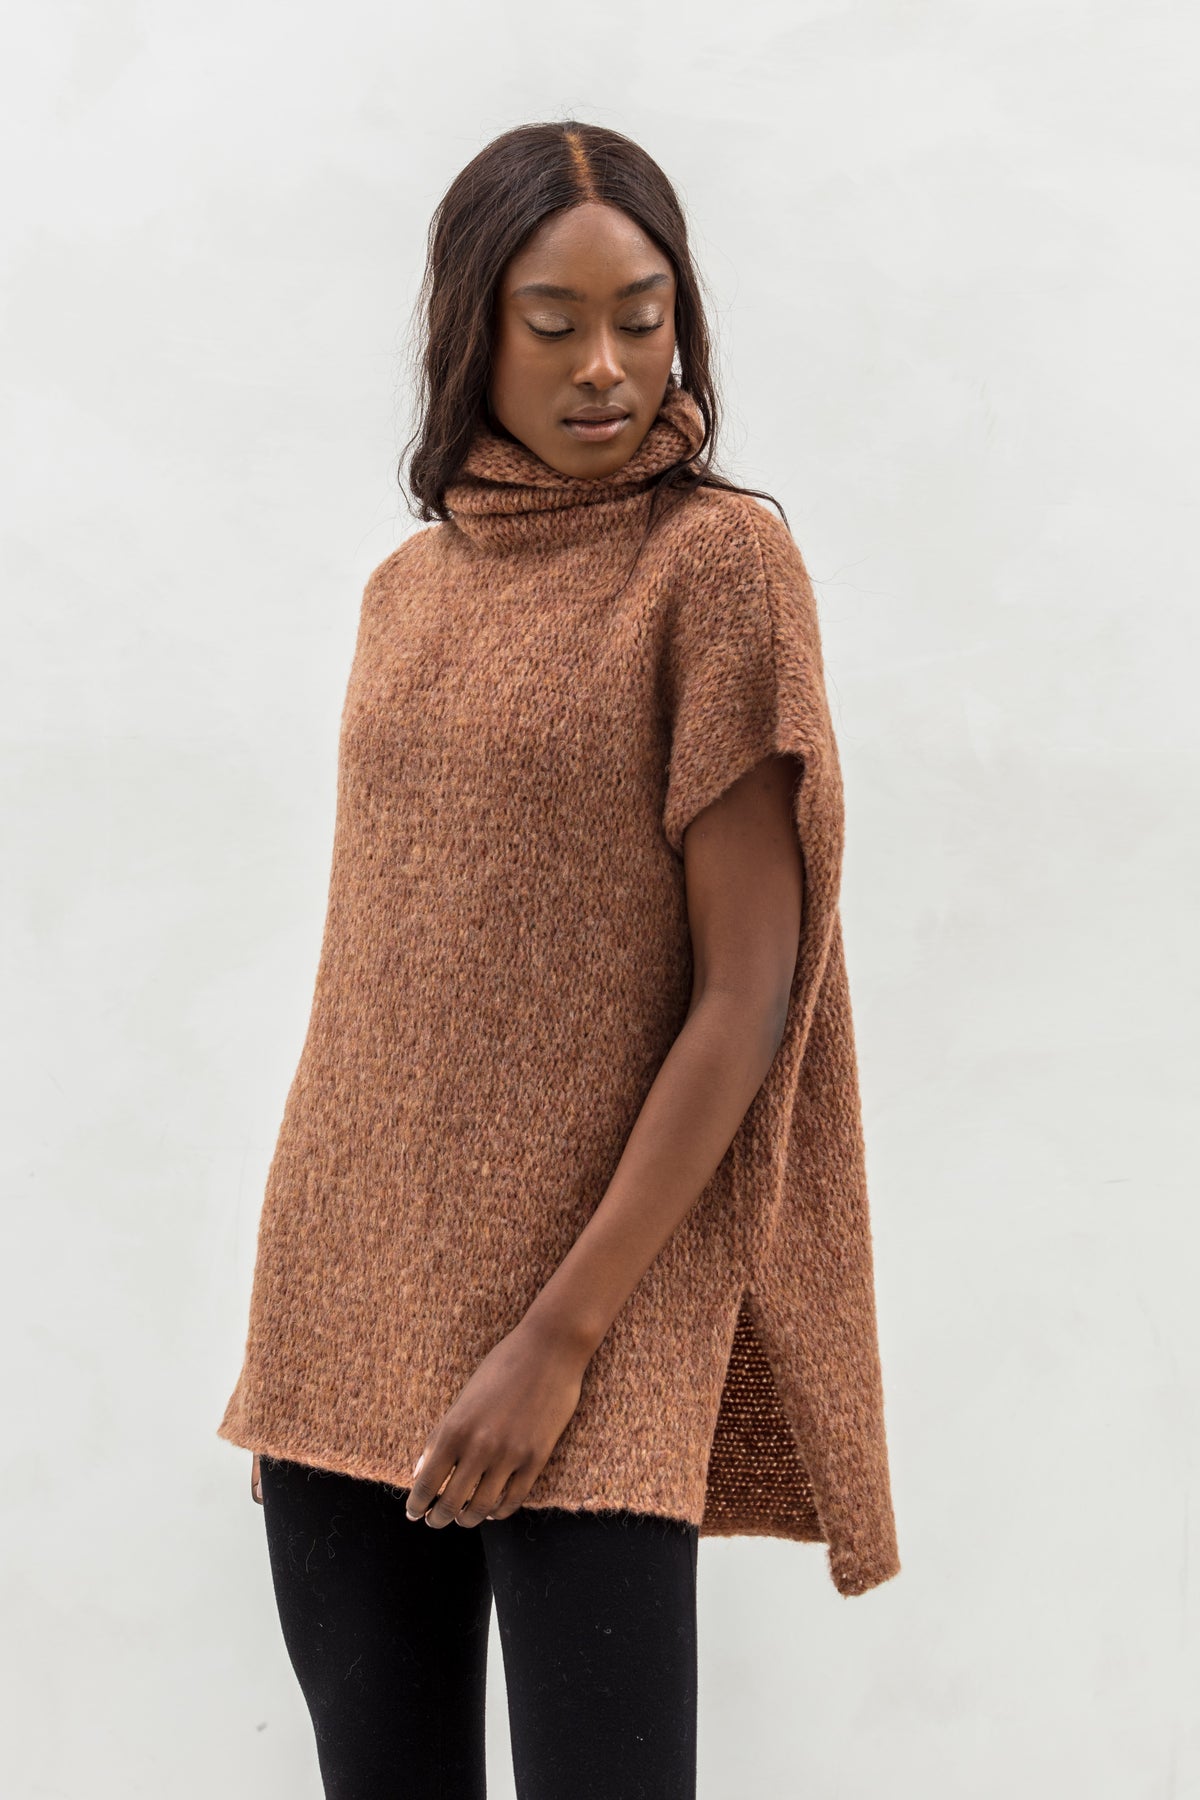 Women's Alpaca Turtleneck Sweater in Camel, Size Medium by Quince